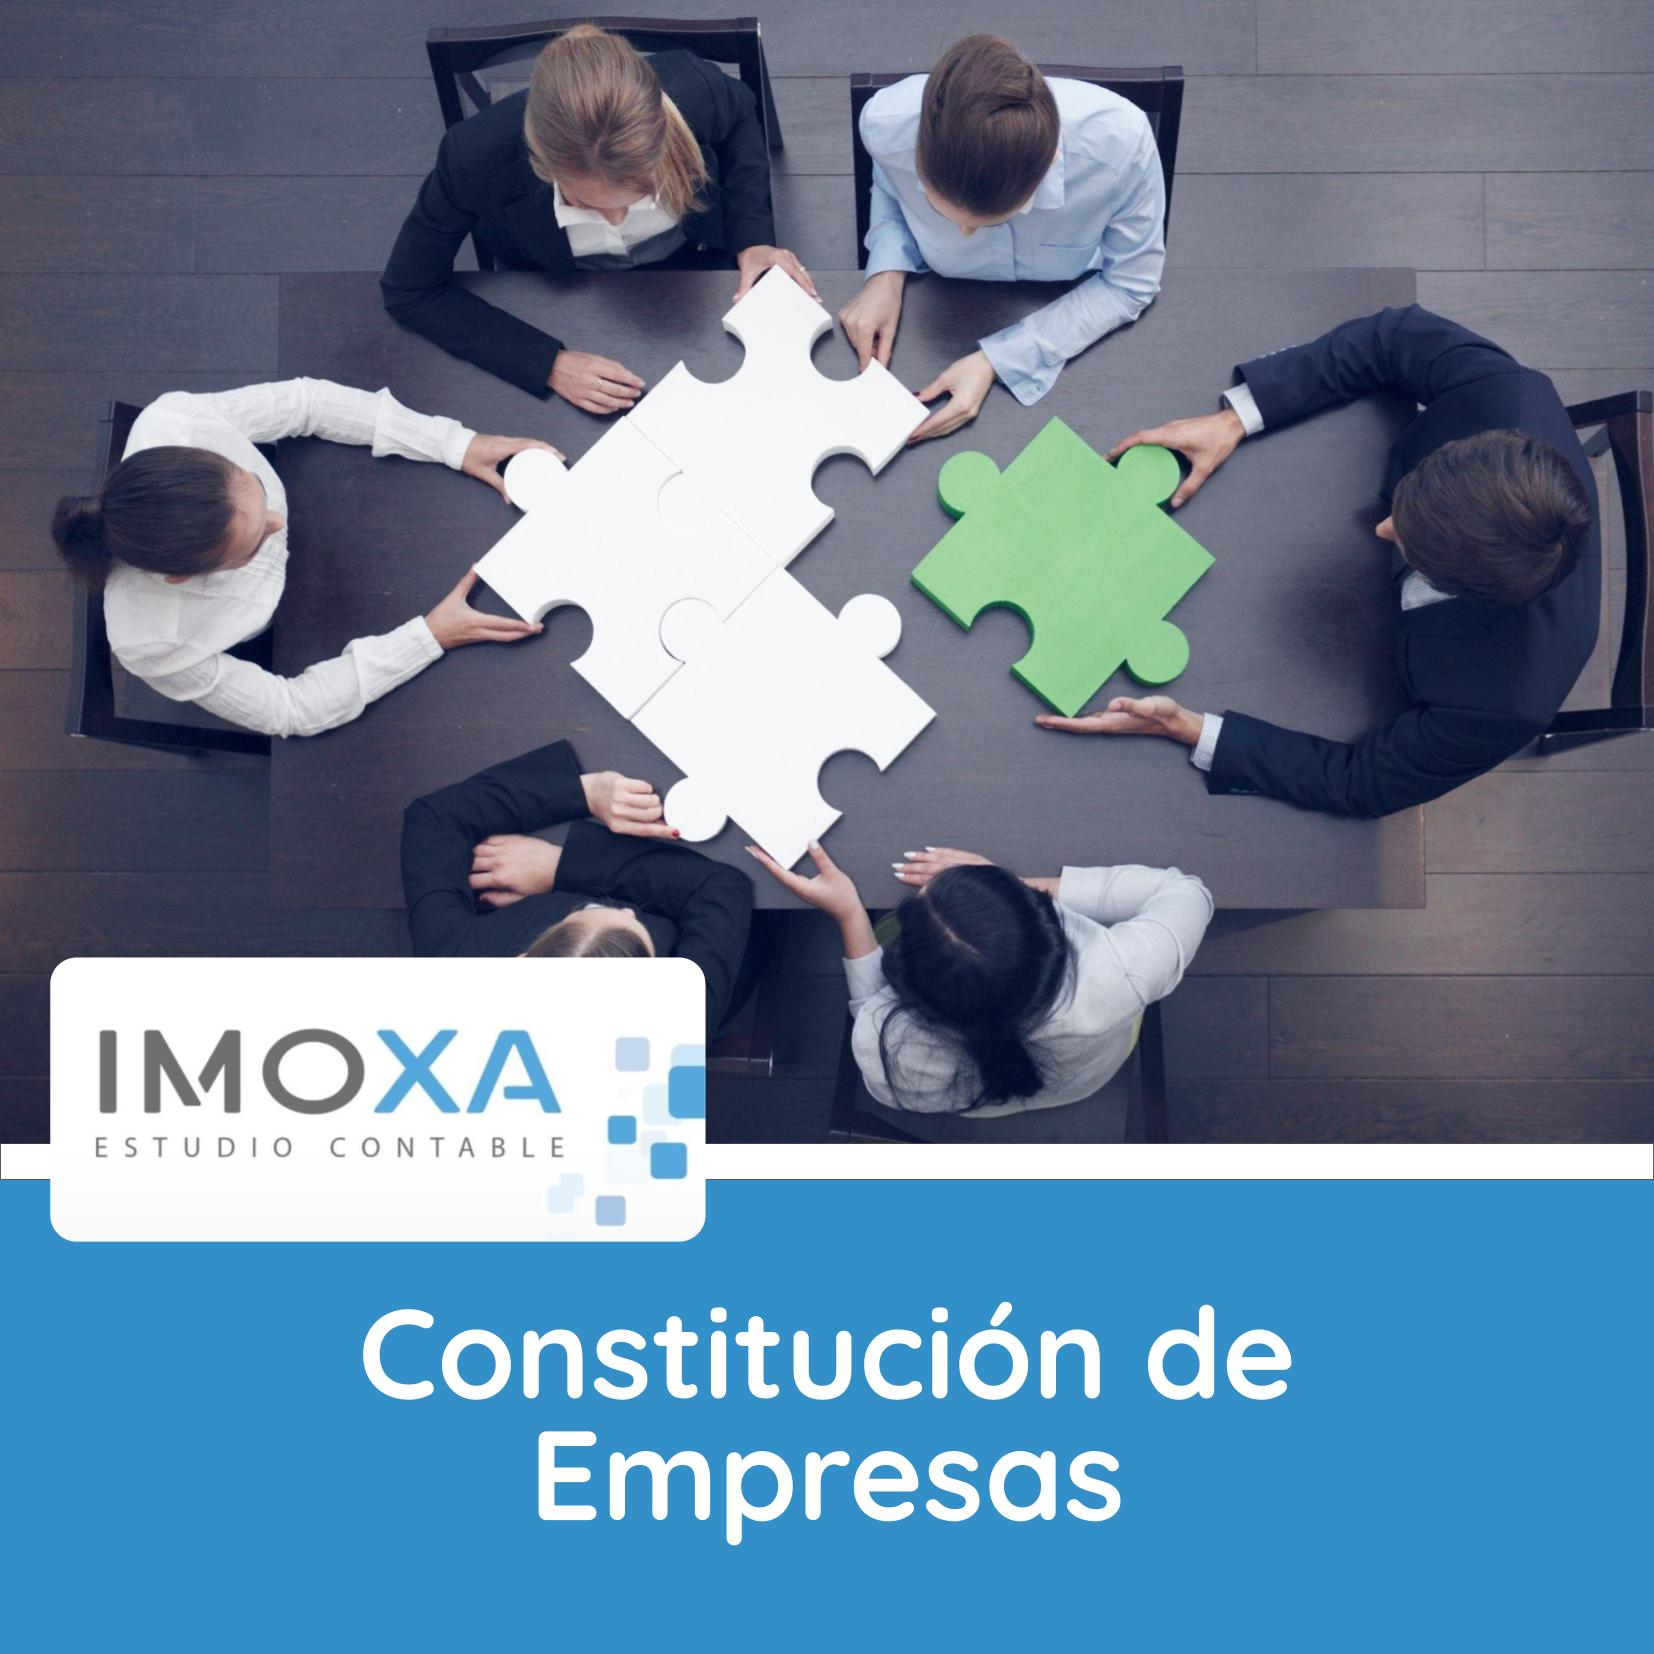 IMOXA Constitucion de Empresas